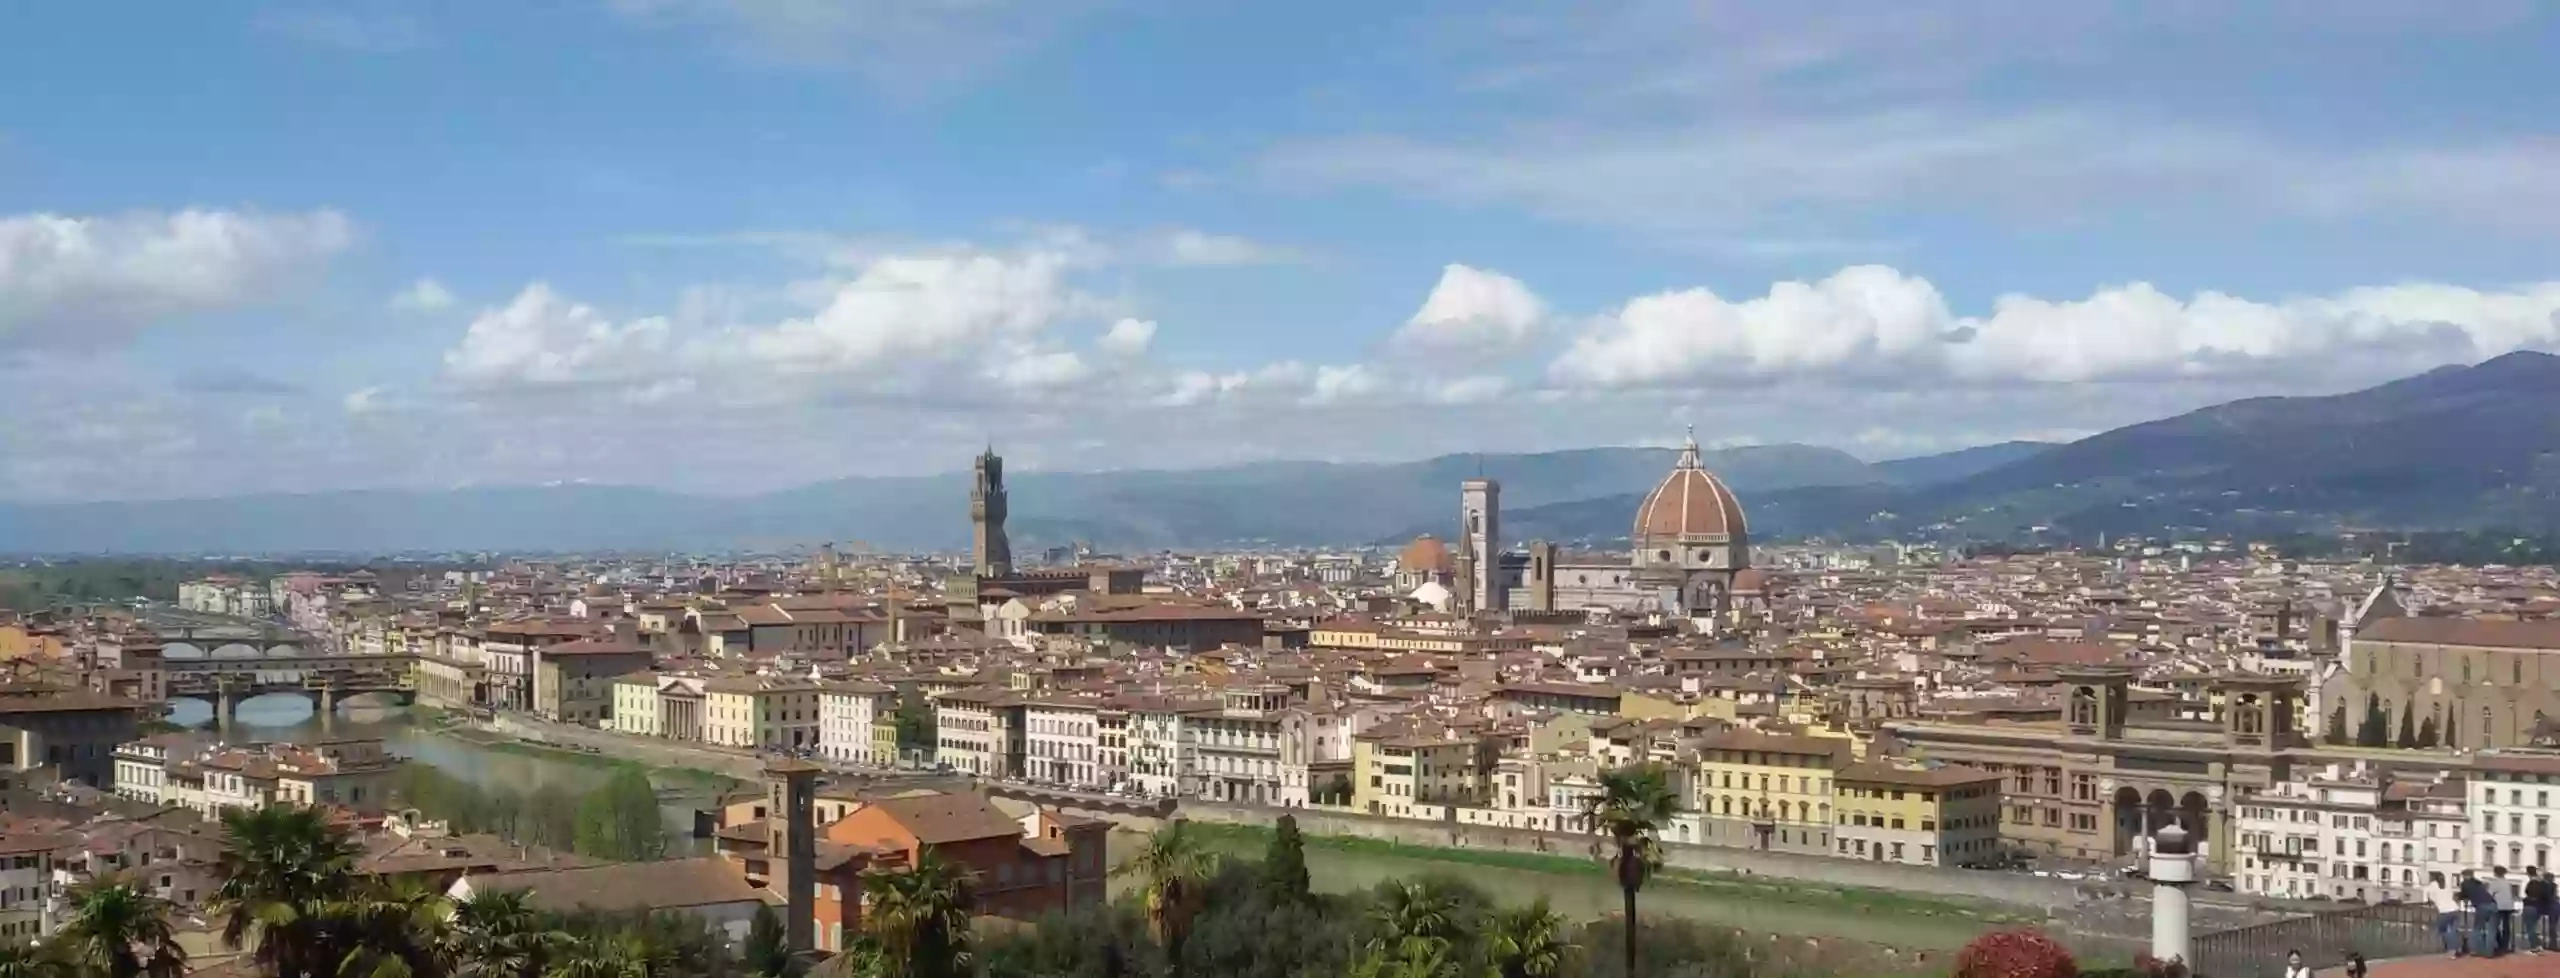 Icona Toscana - Guida Turistica a Firenze e in Toscana